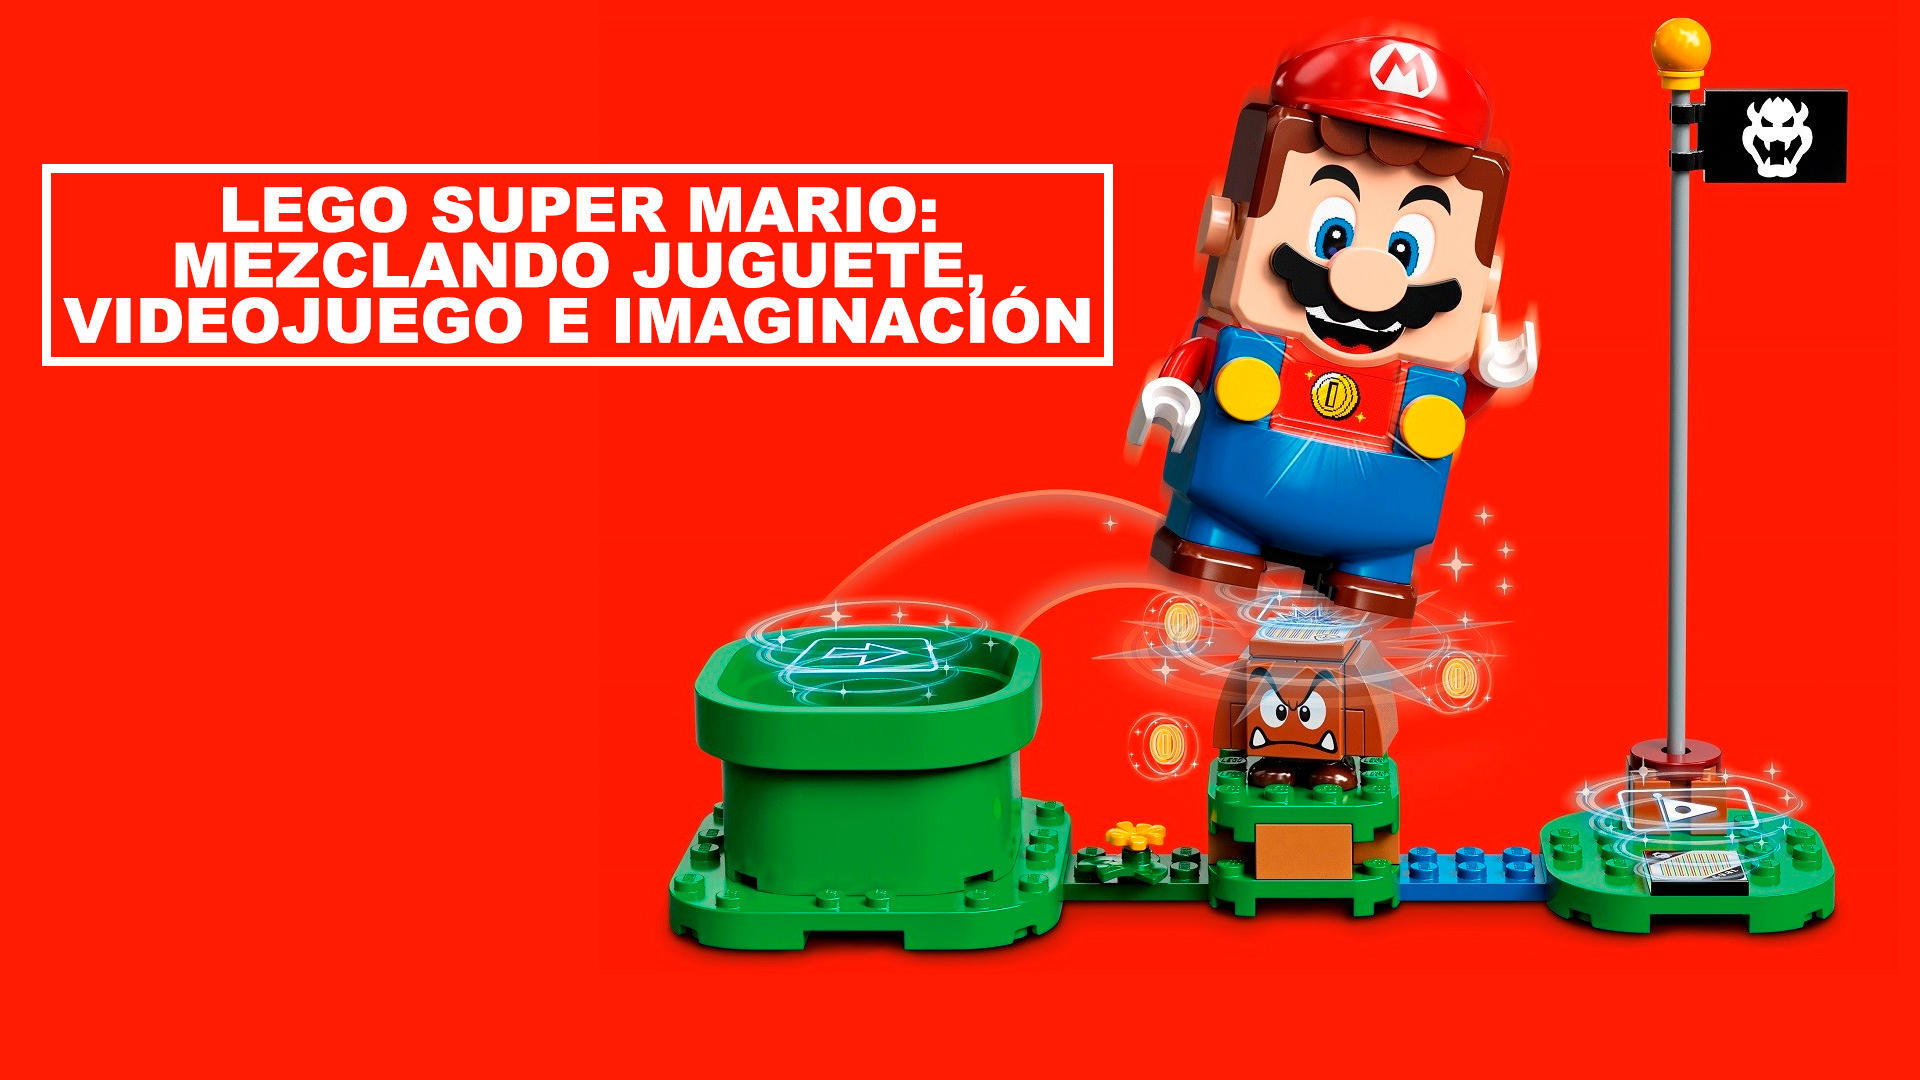 LEGO Super Mario: Mezclando juguete, videojuego e imaginacin